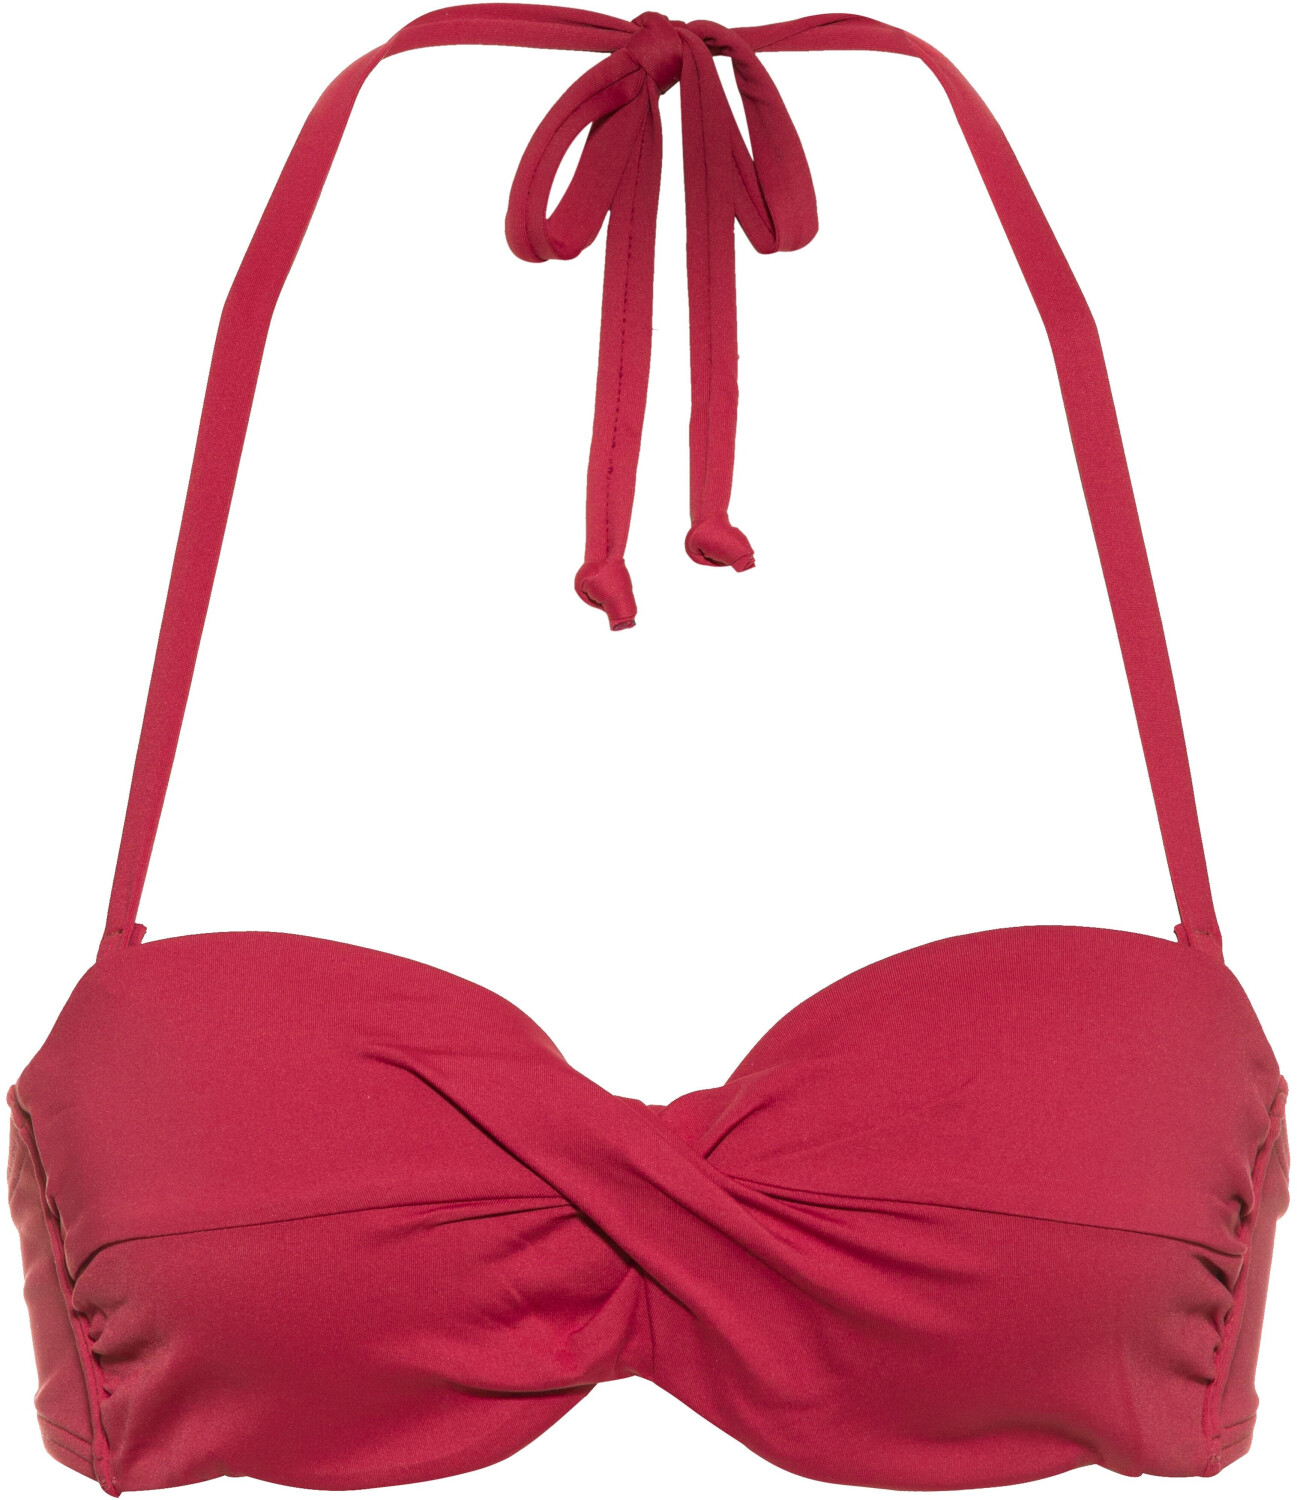 S.Oliver Bügel-Bandeau-Bikini-Top Rome rot ab 44,99 € | Preisvergleich bei